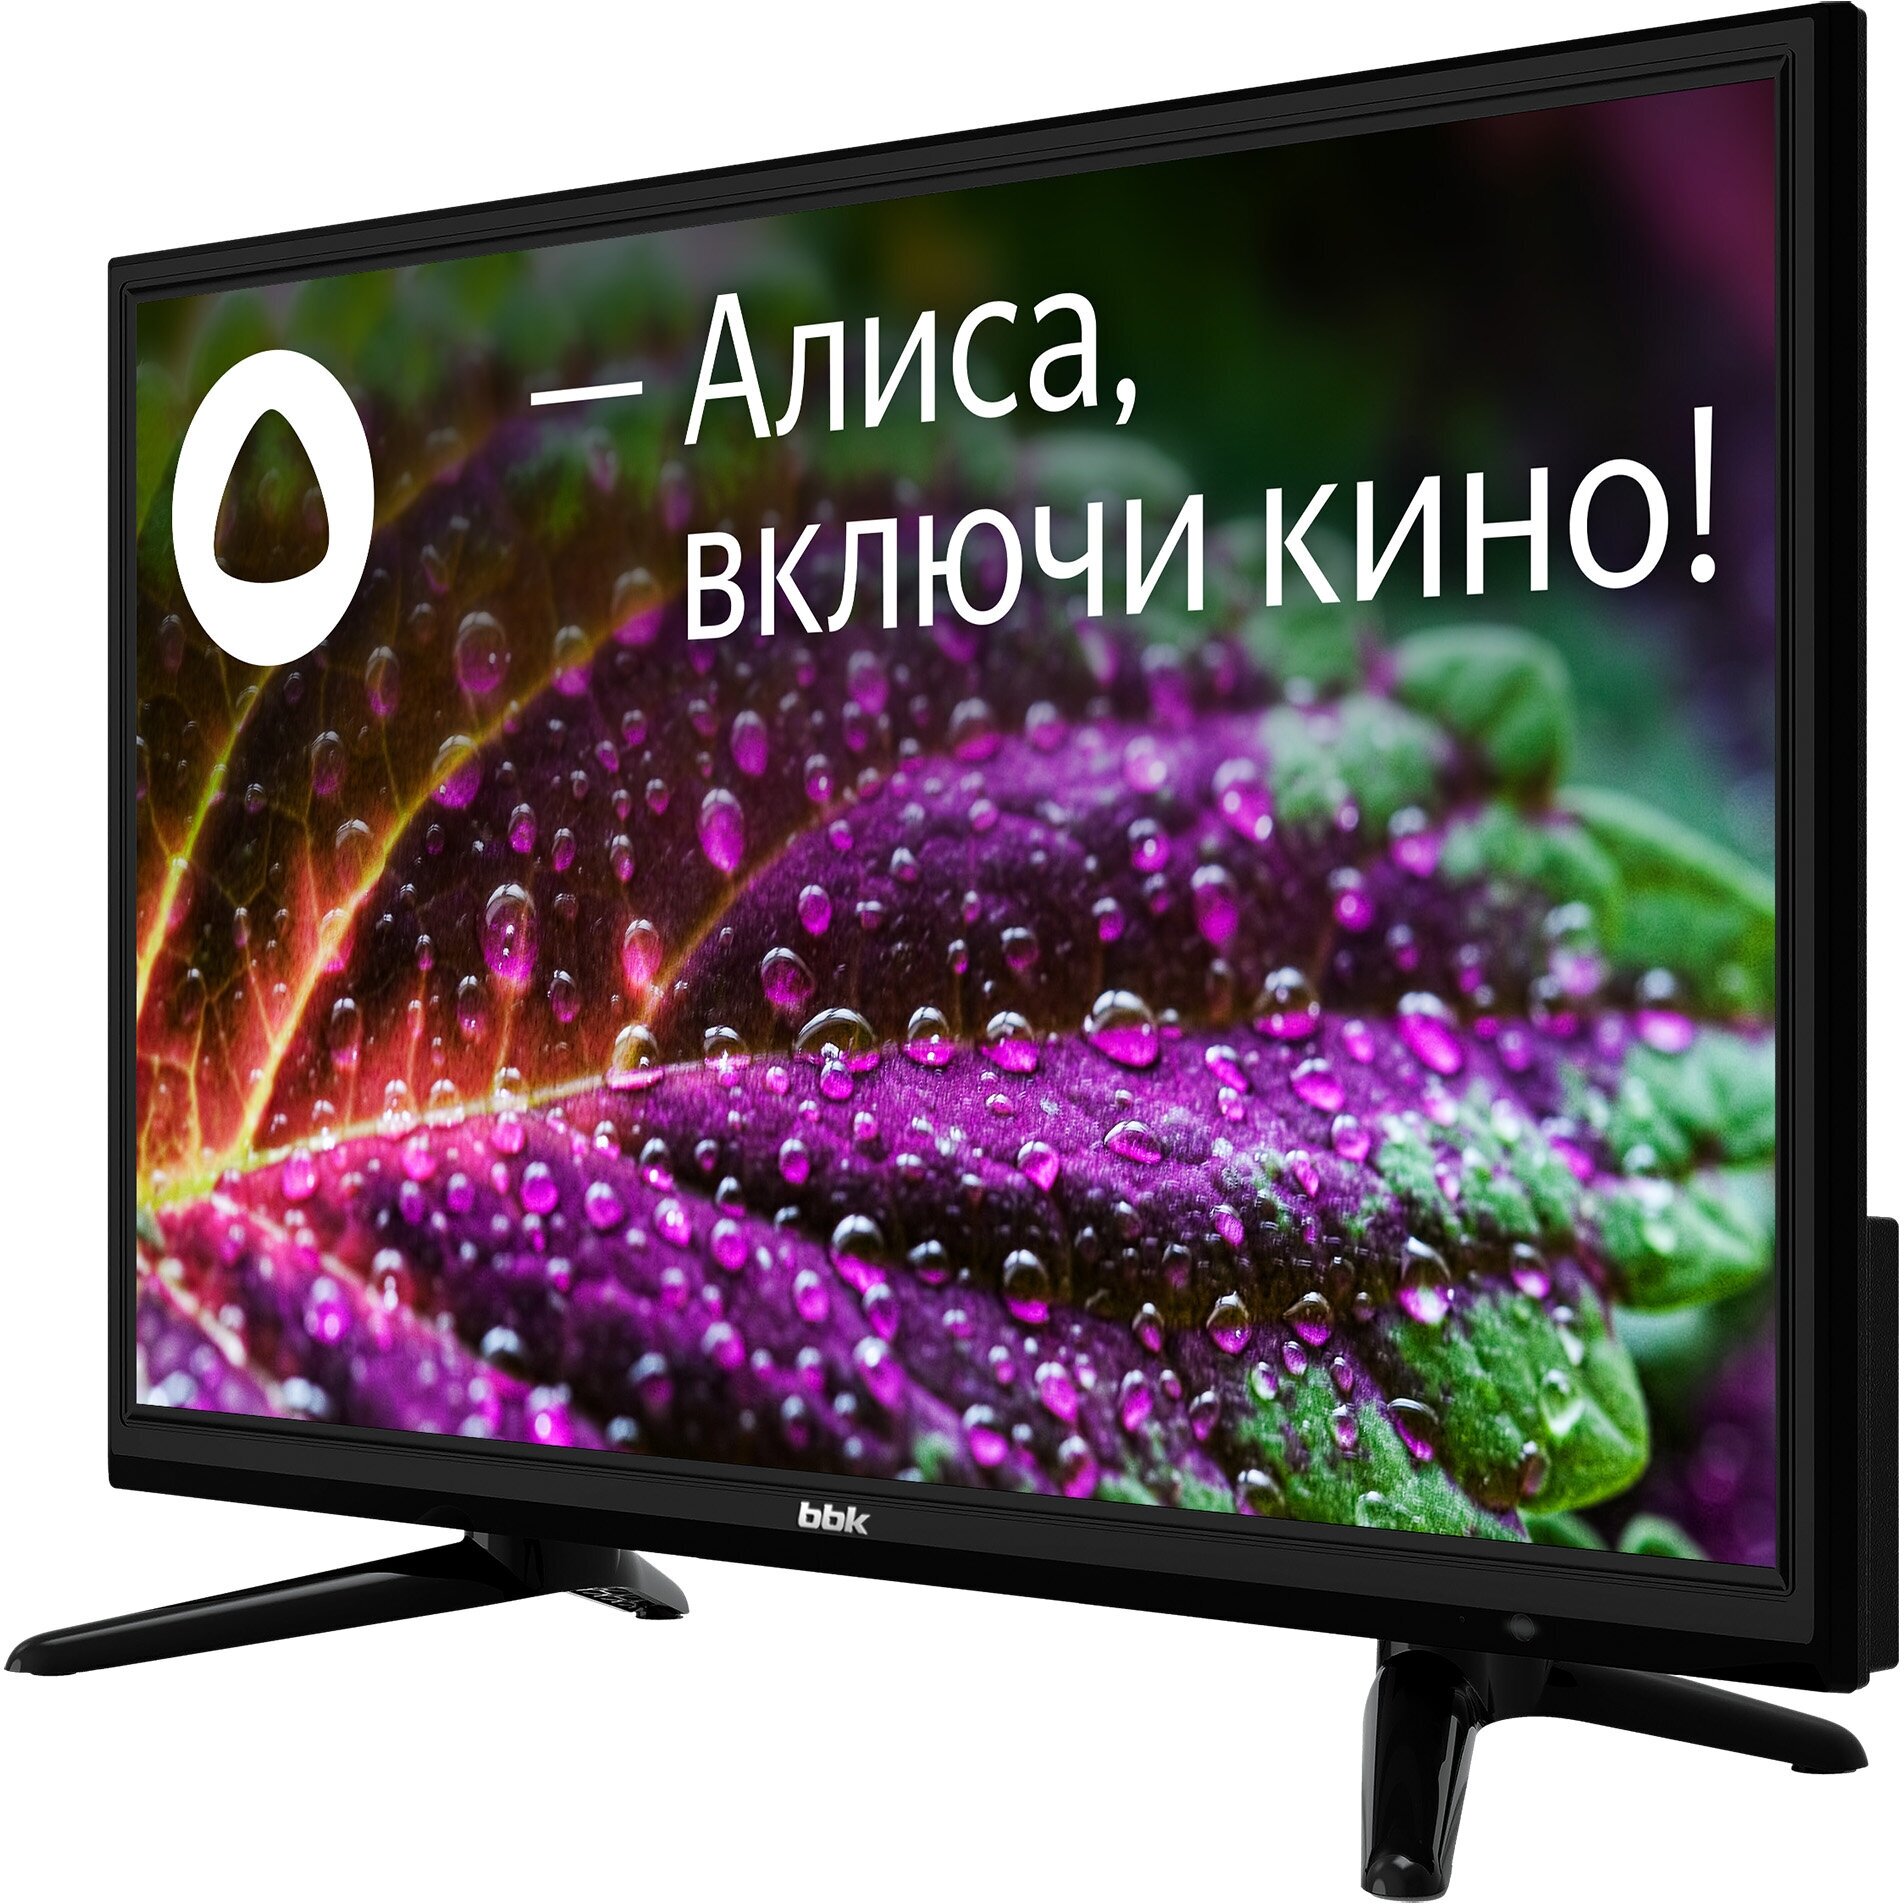 Телевизор LED BBK 24" 24LEX-7287/TS2C Яндекс. ТВ черный HD READY 50Hz DVB-T2 DVB-C DVB-S2 USB WiFi Smart TV (RUS)